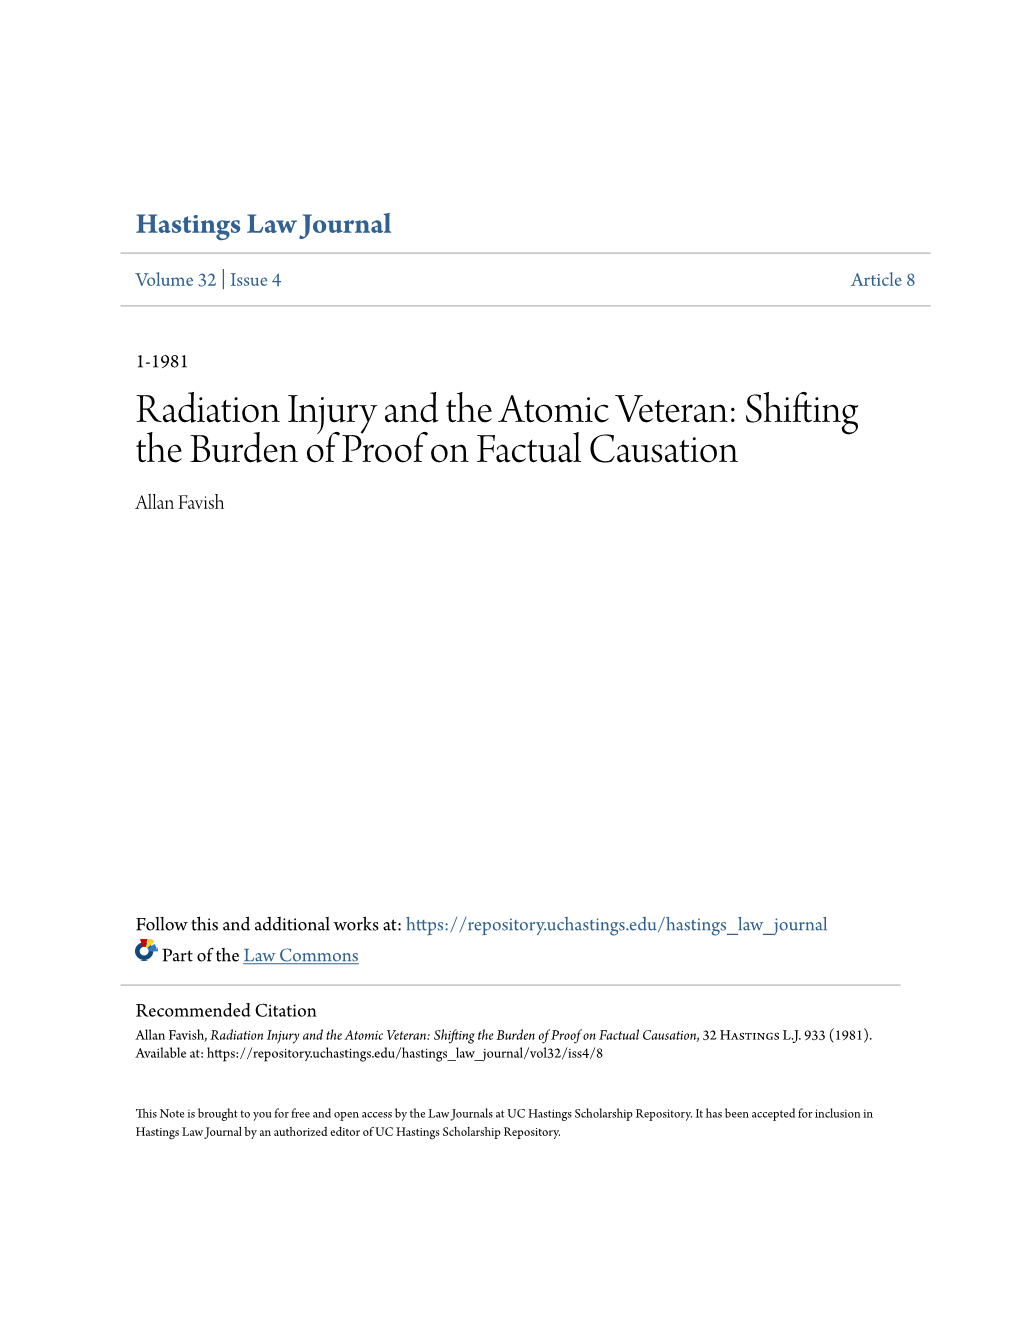 Radiation Injury and the Atomic Veteran: Shifting the Burden of Proof on Factual Causation Allan Favish